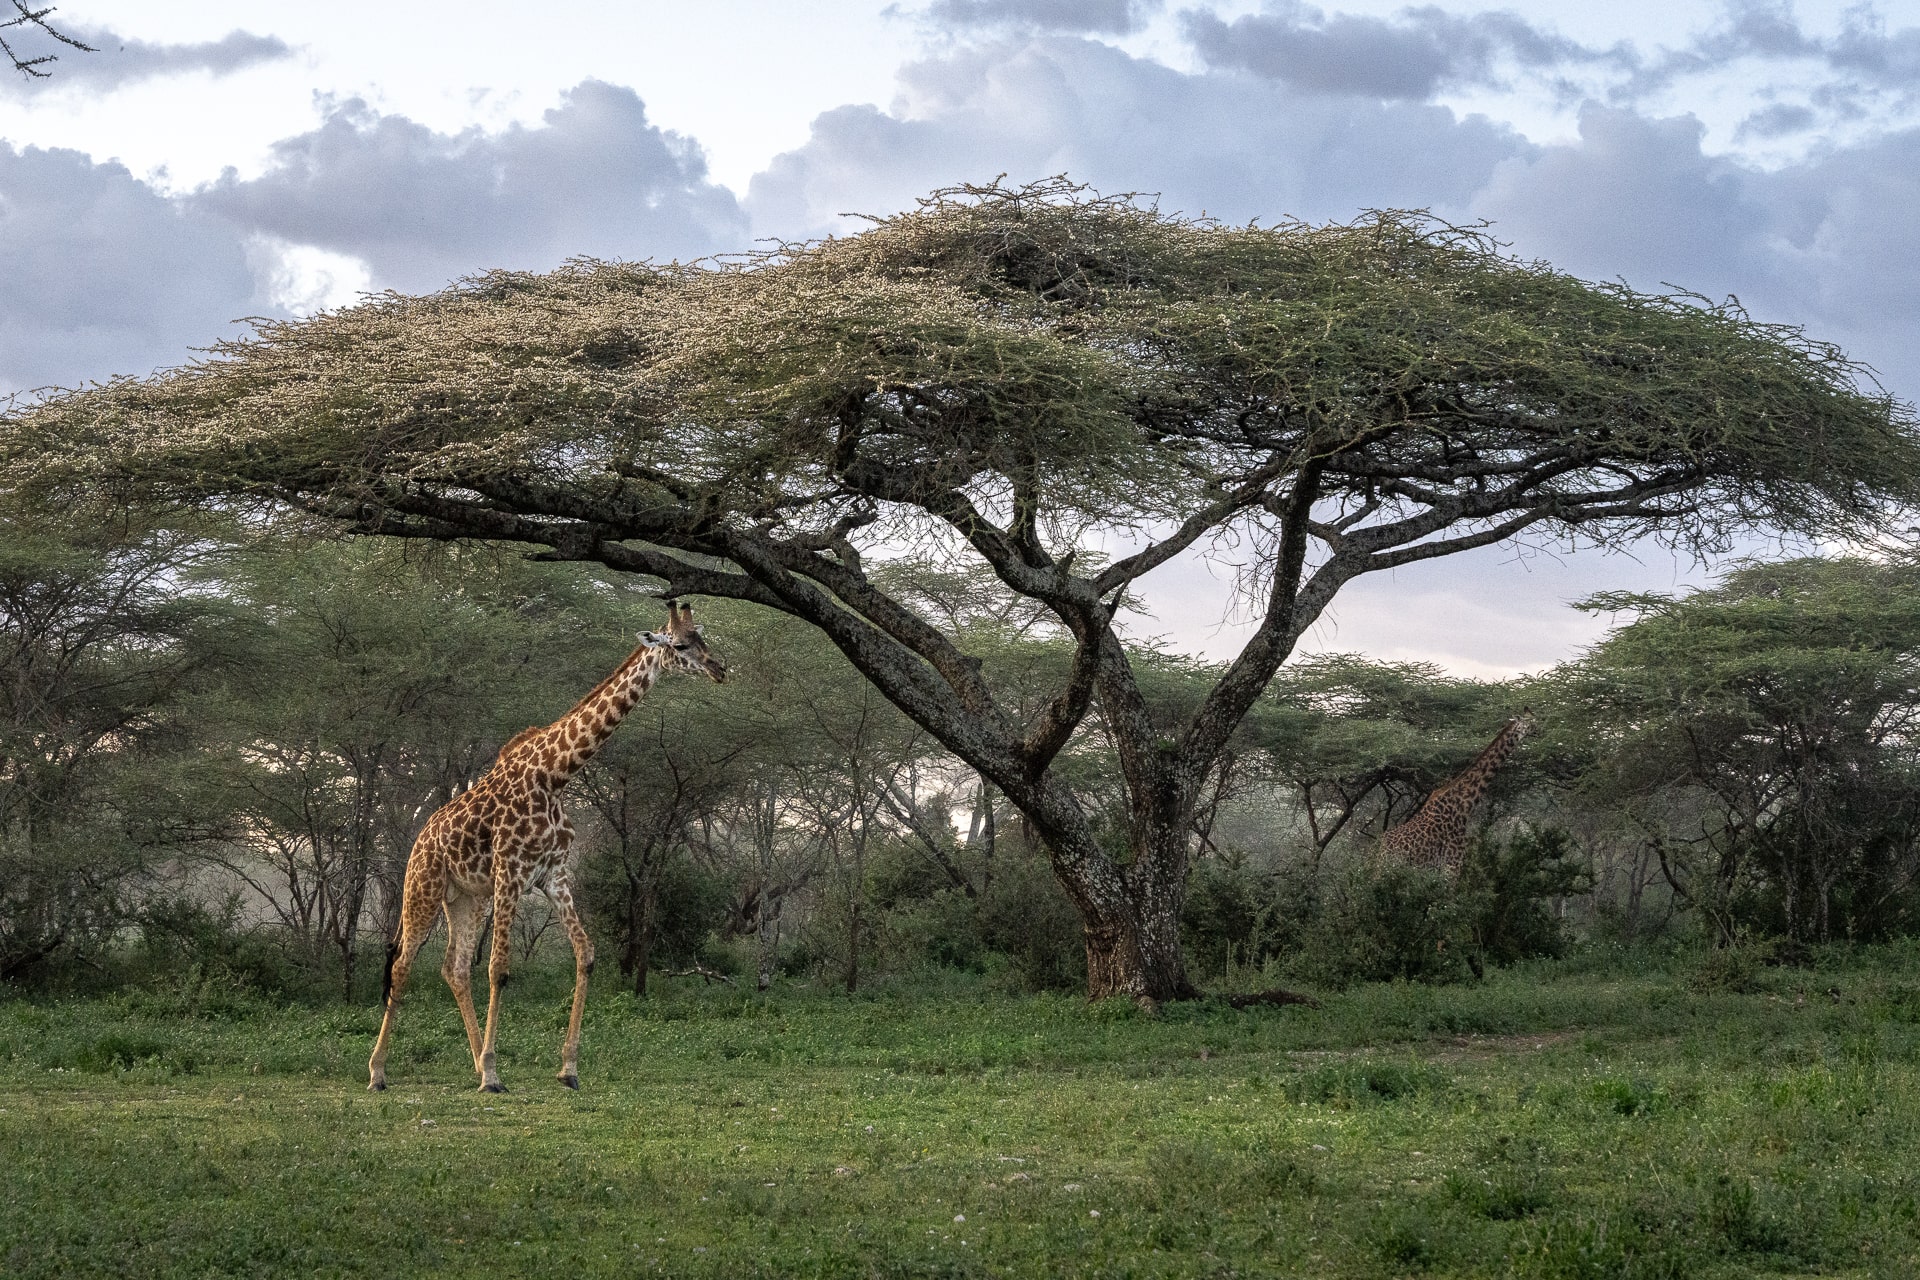 Wilderness Usawa Serengeti, the first luxury mobile camp in Tanzania